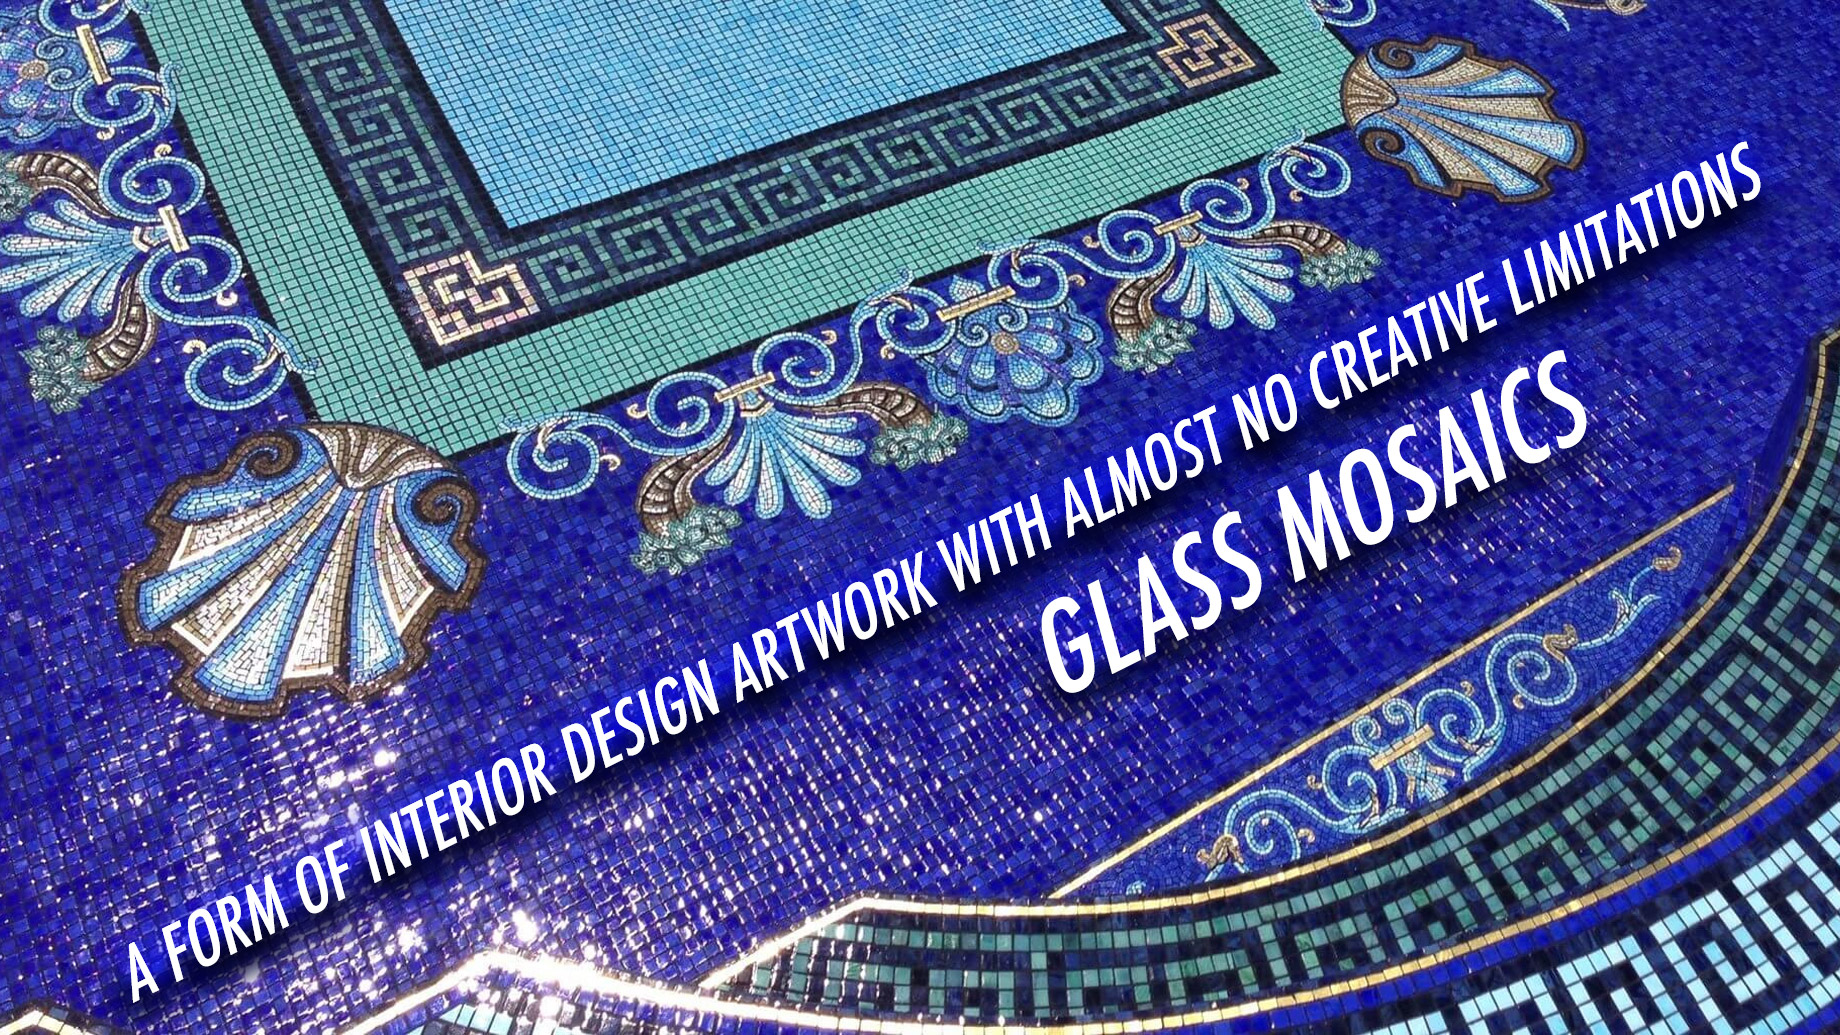 Glass Mosaics - A Form of Interior Design Artwork With Almost No Creative Limitations